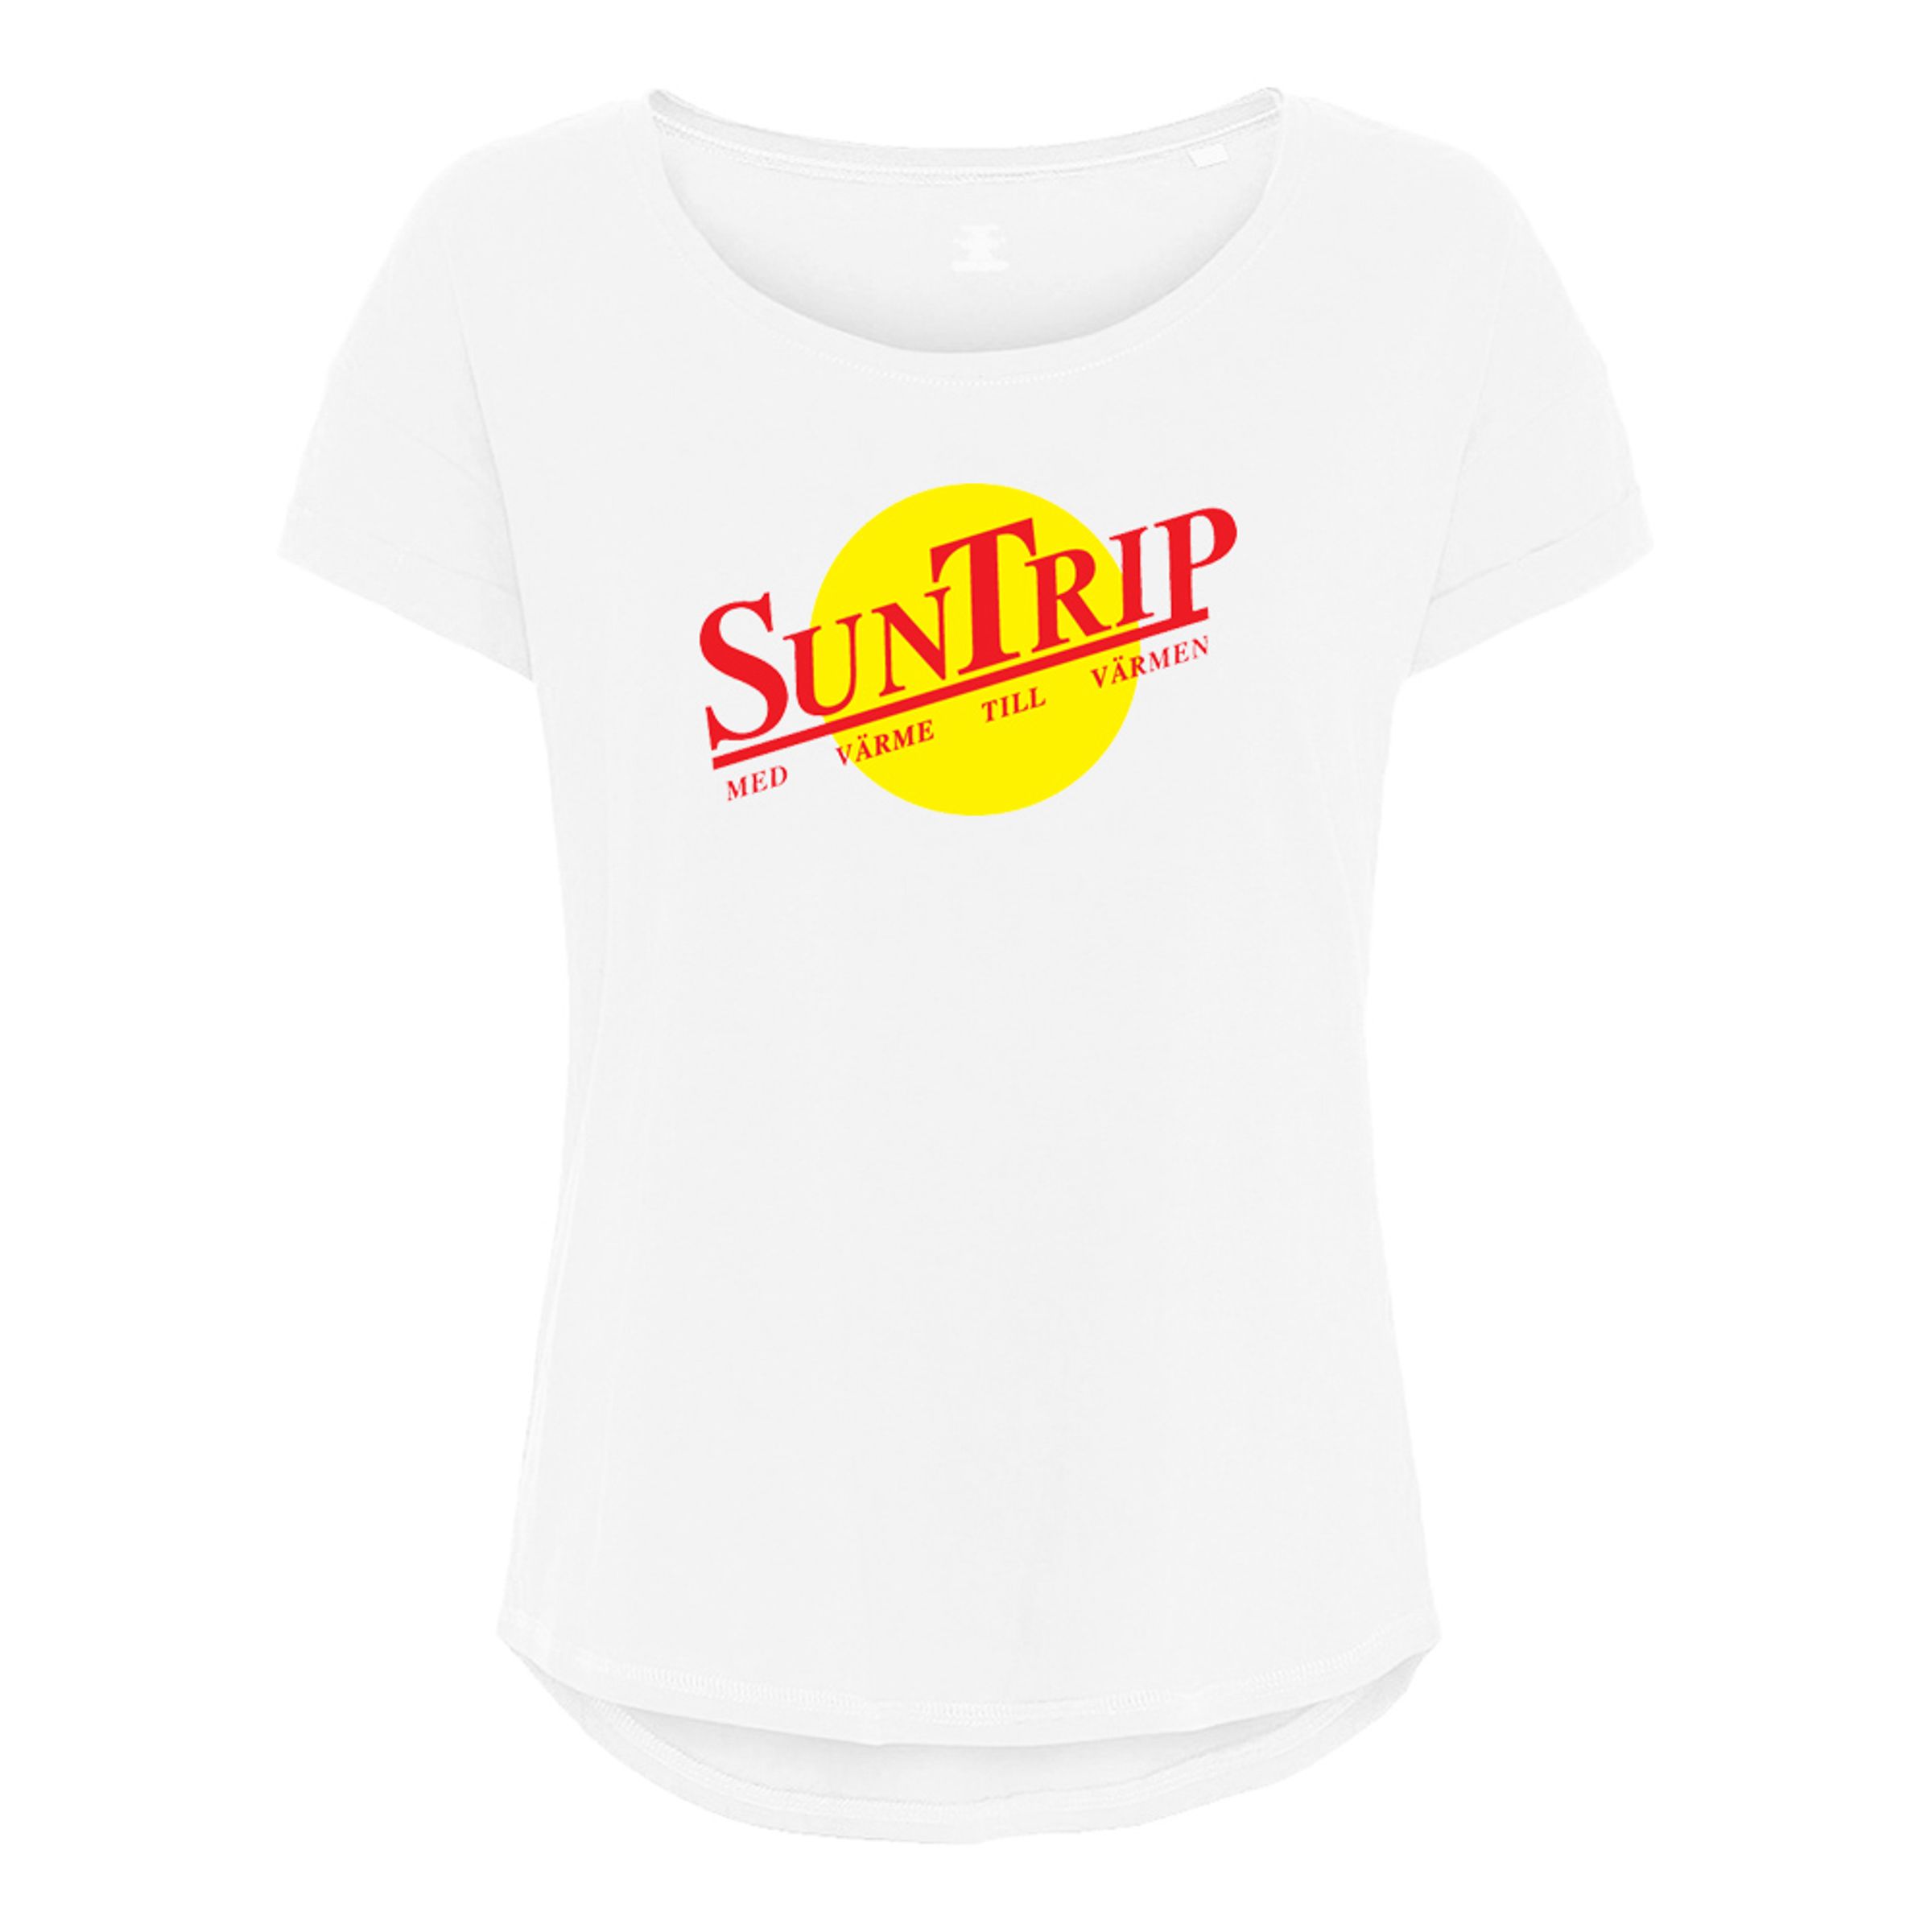 SunTrip Dam T-shirt - Large